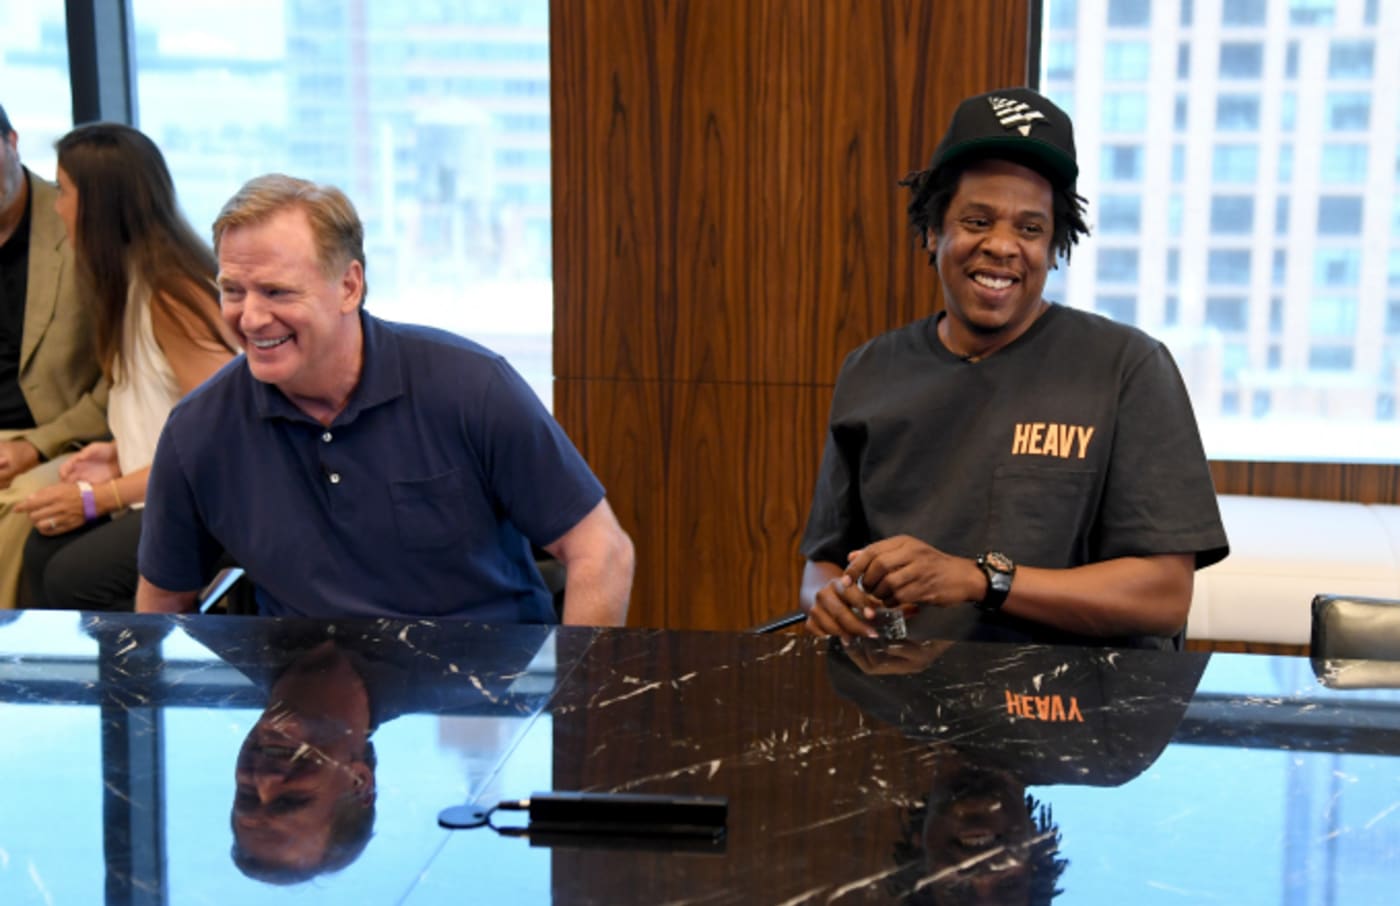 NFL Commissioner Roger Goodell and Jay Z